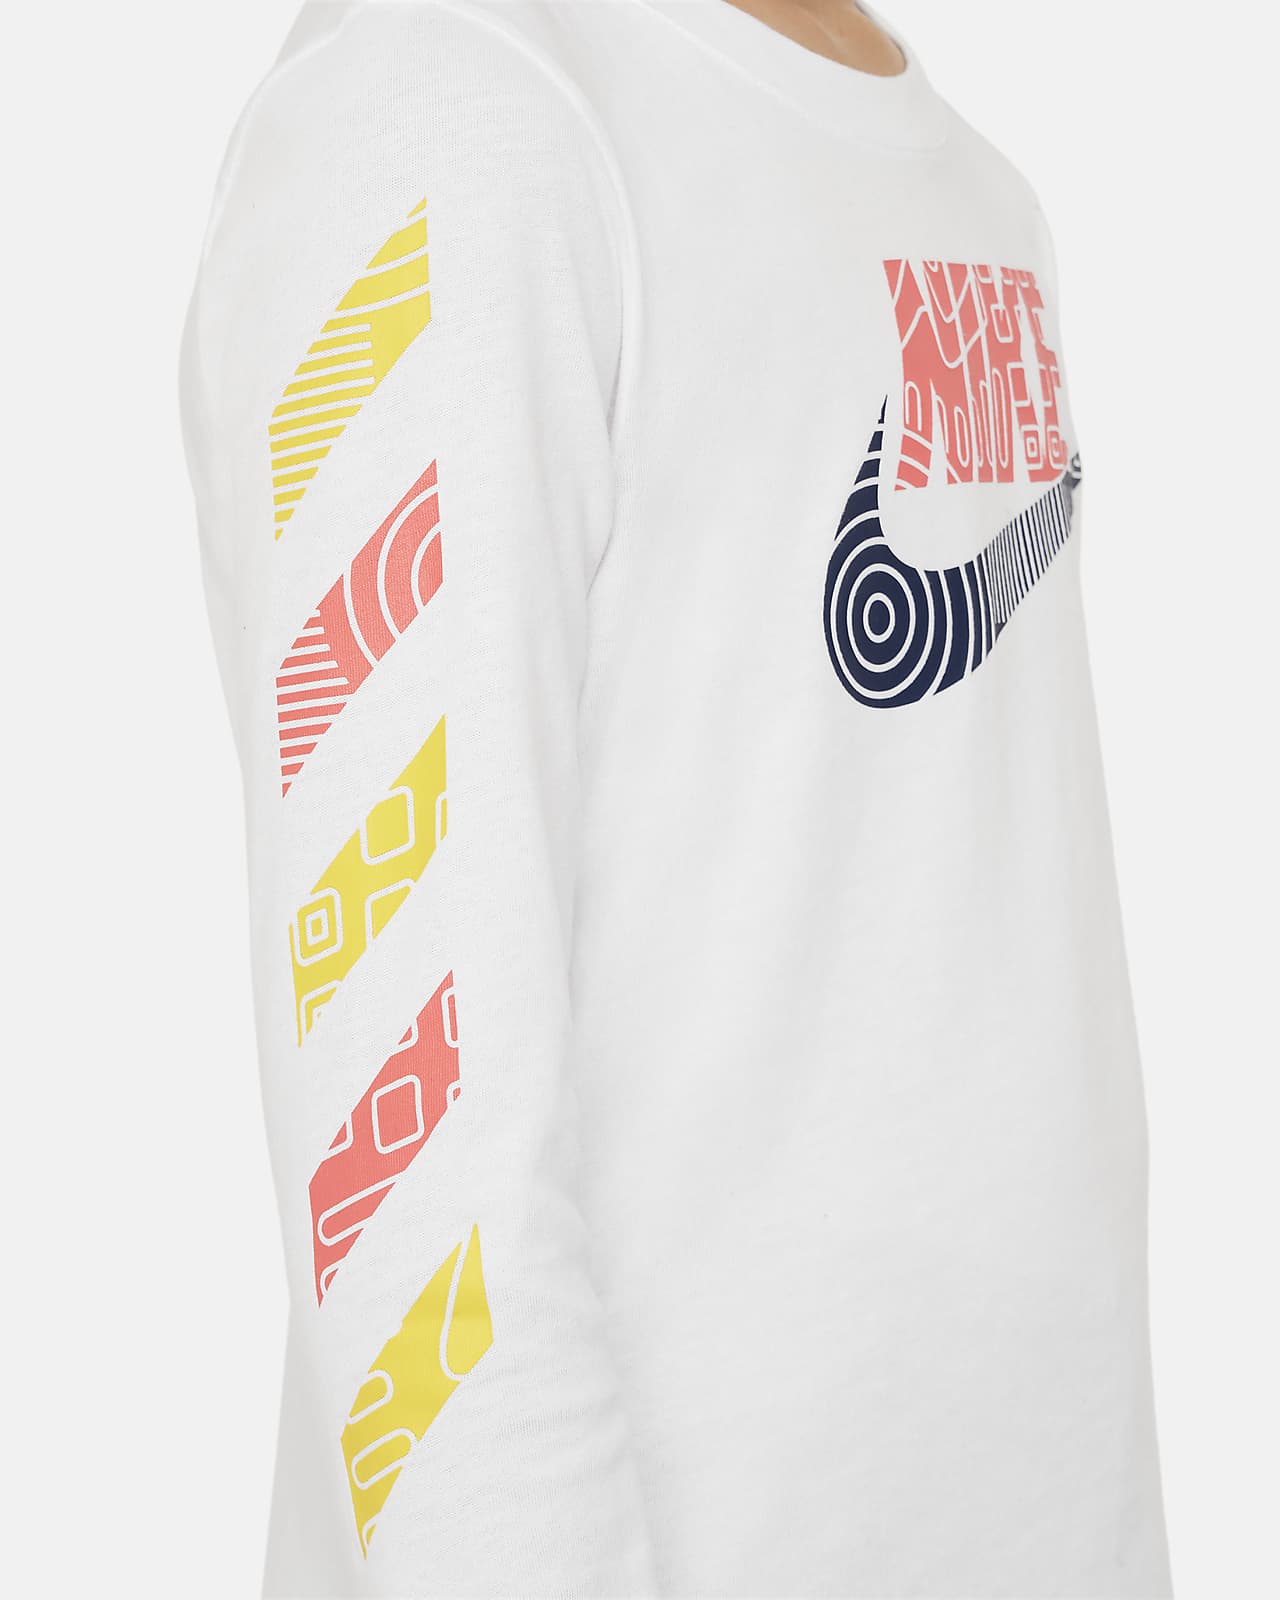 JP Long Hazard Tread Nike Sleeve Tee Nike Futura T-Shirt. Little Kids